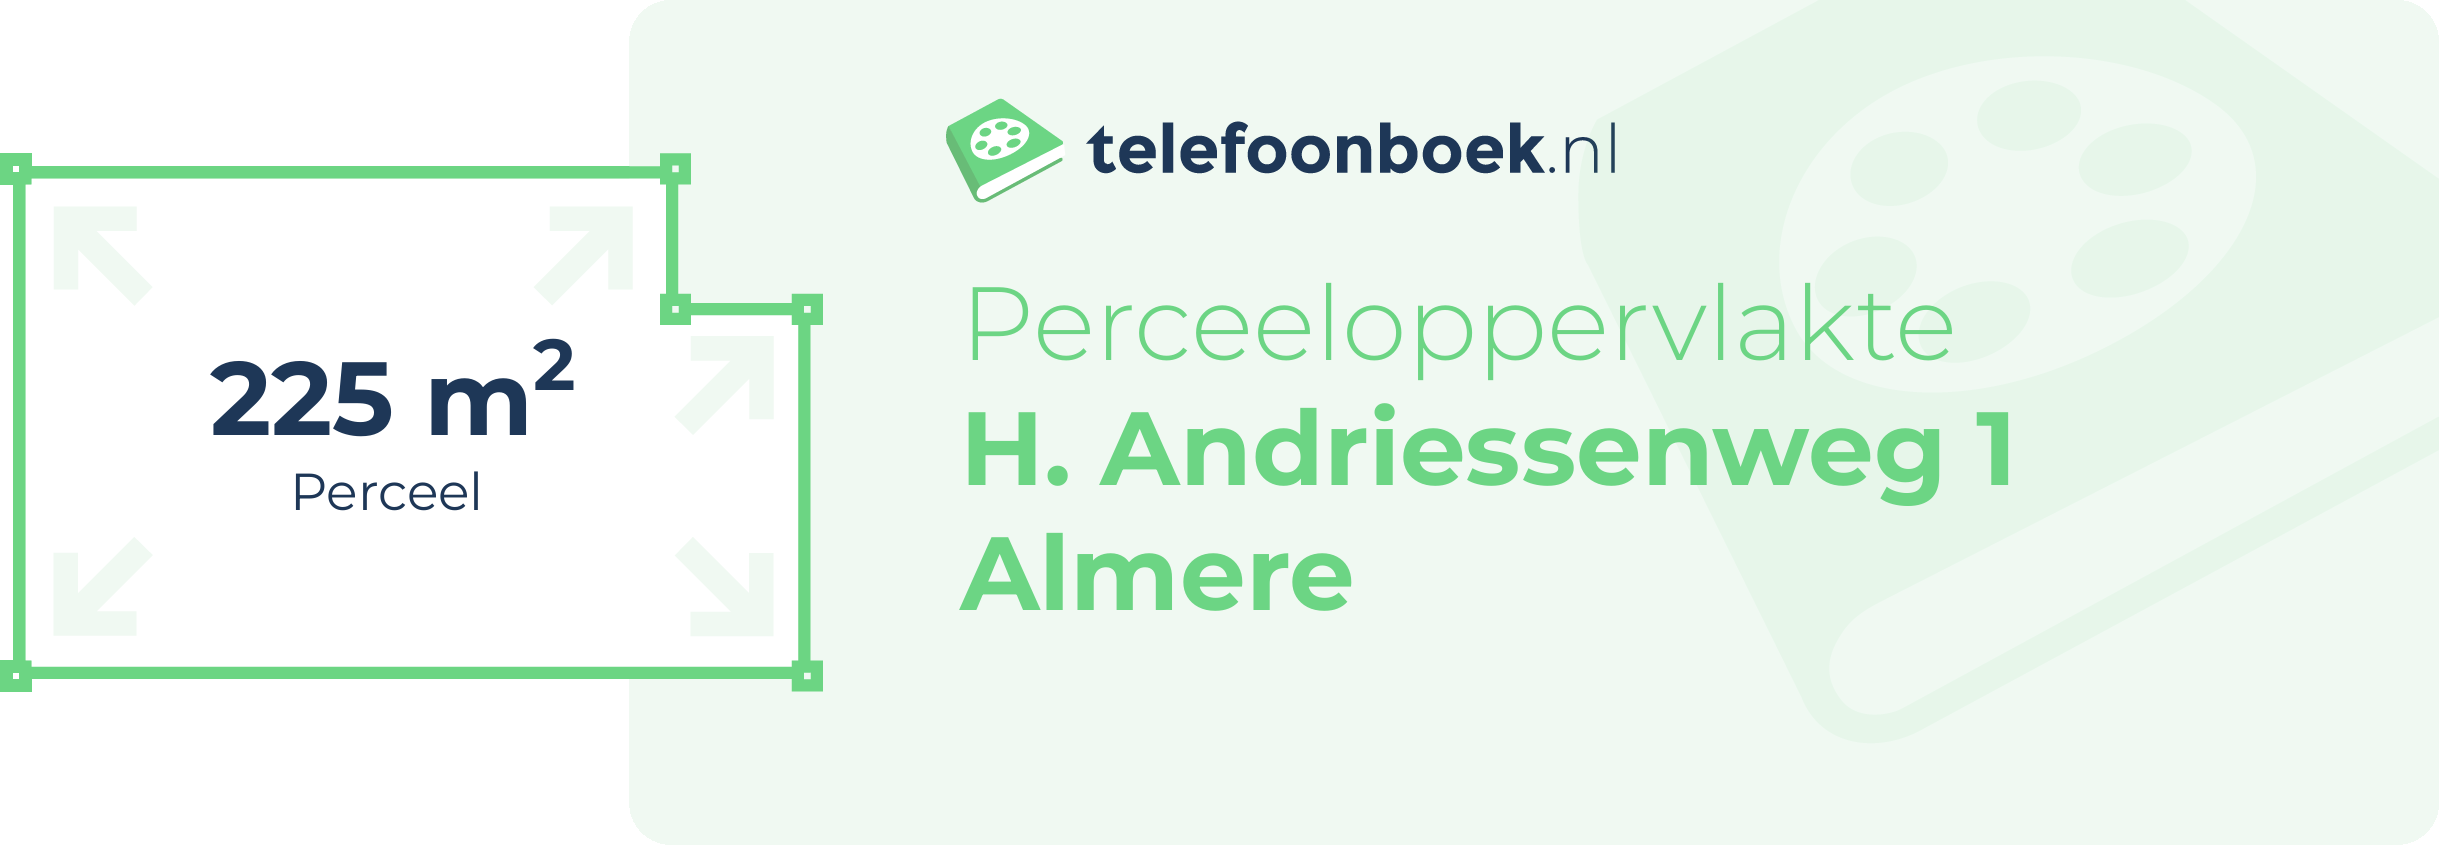 Perceeloppervlakte H. Andriessenweg 1 Almere